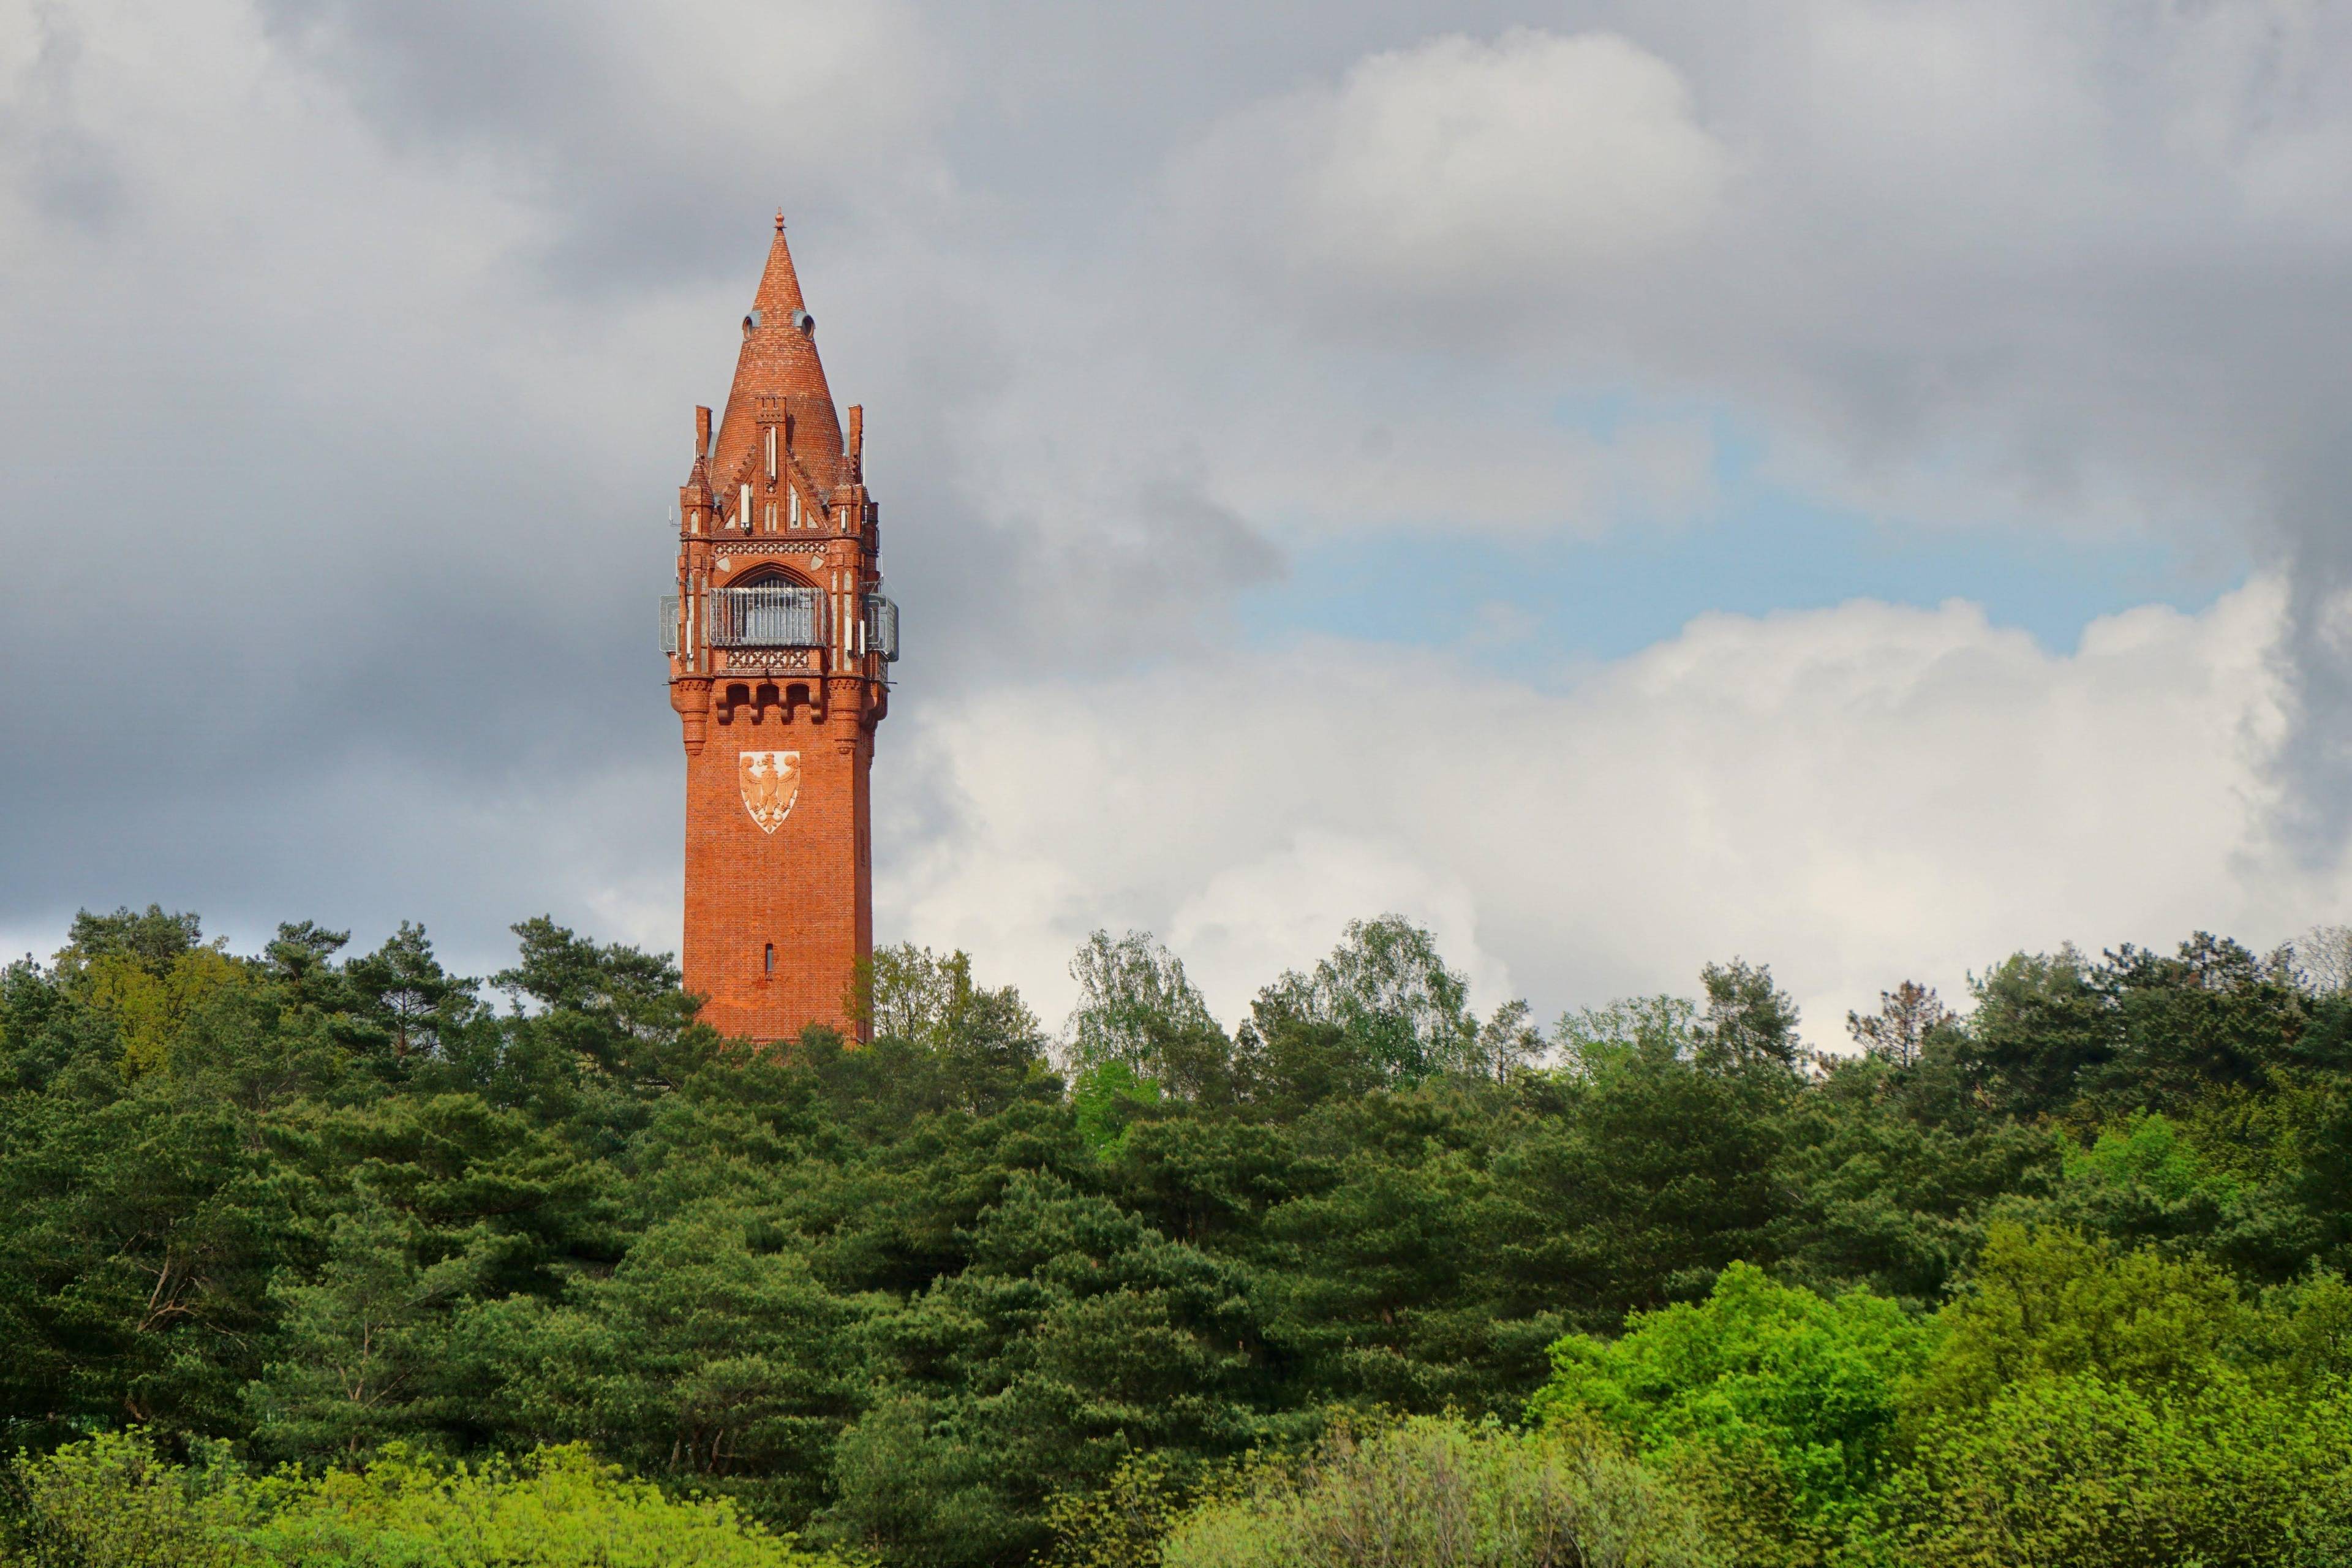 Grunewald Tower